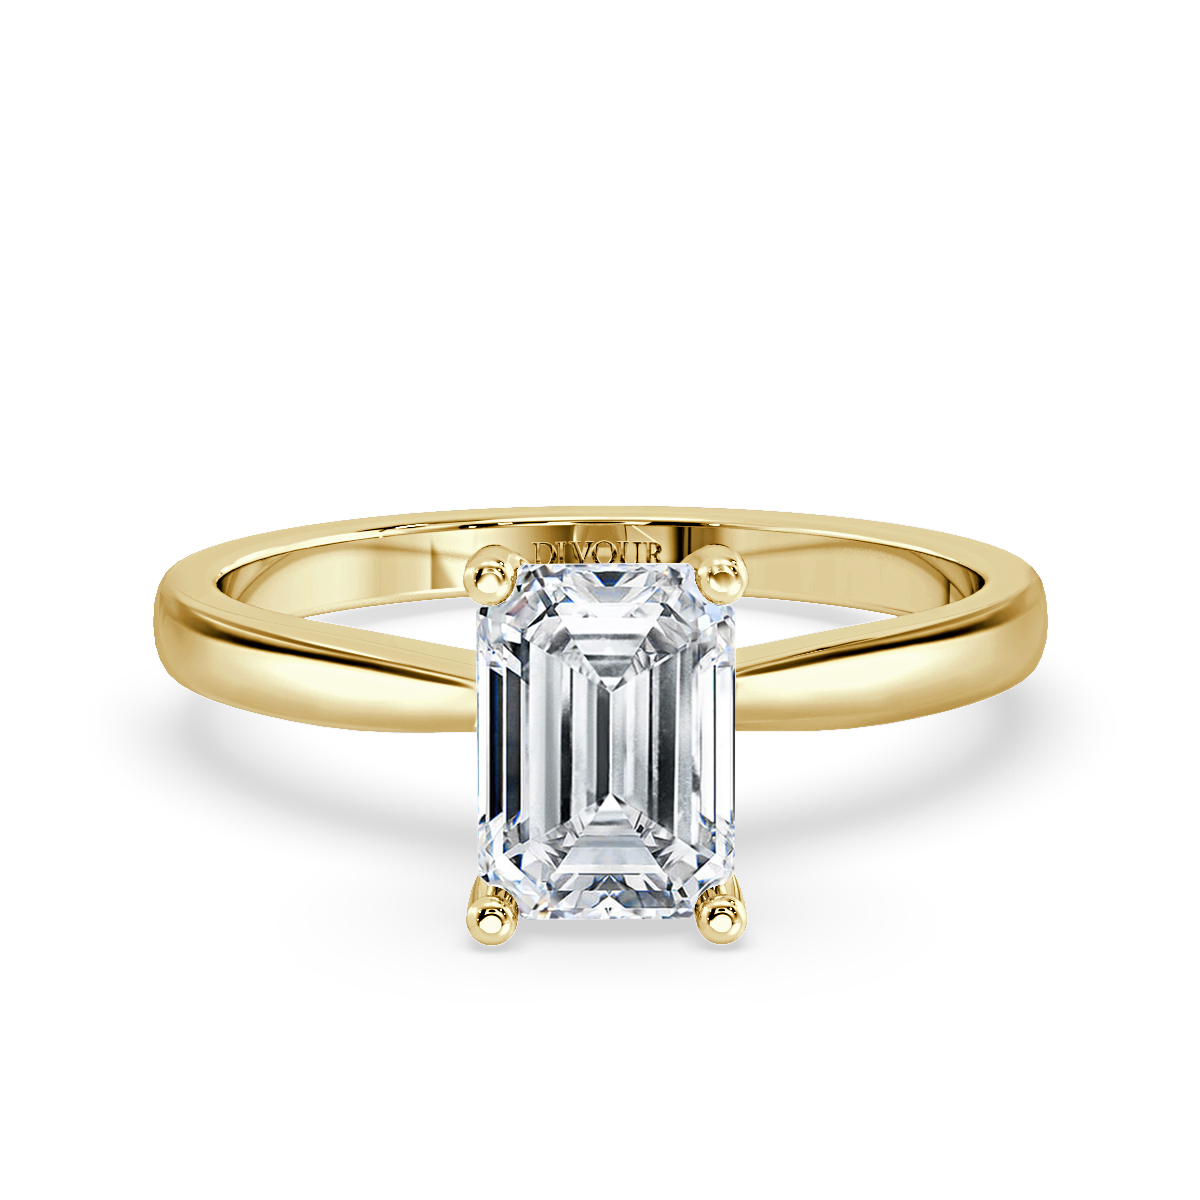 Traditonal Emerald Cut Diamond Solitaire Ring